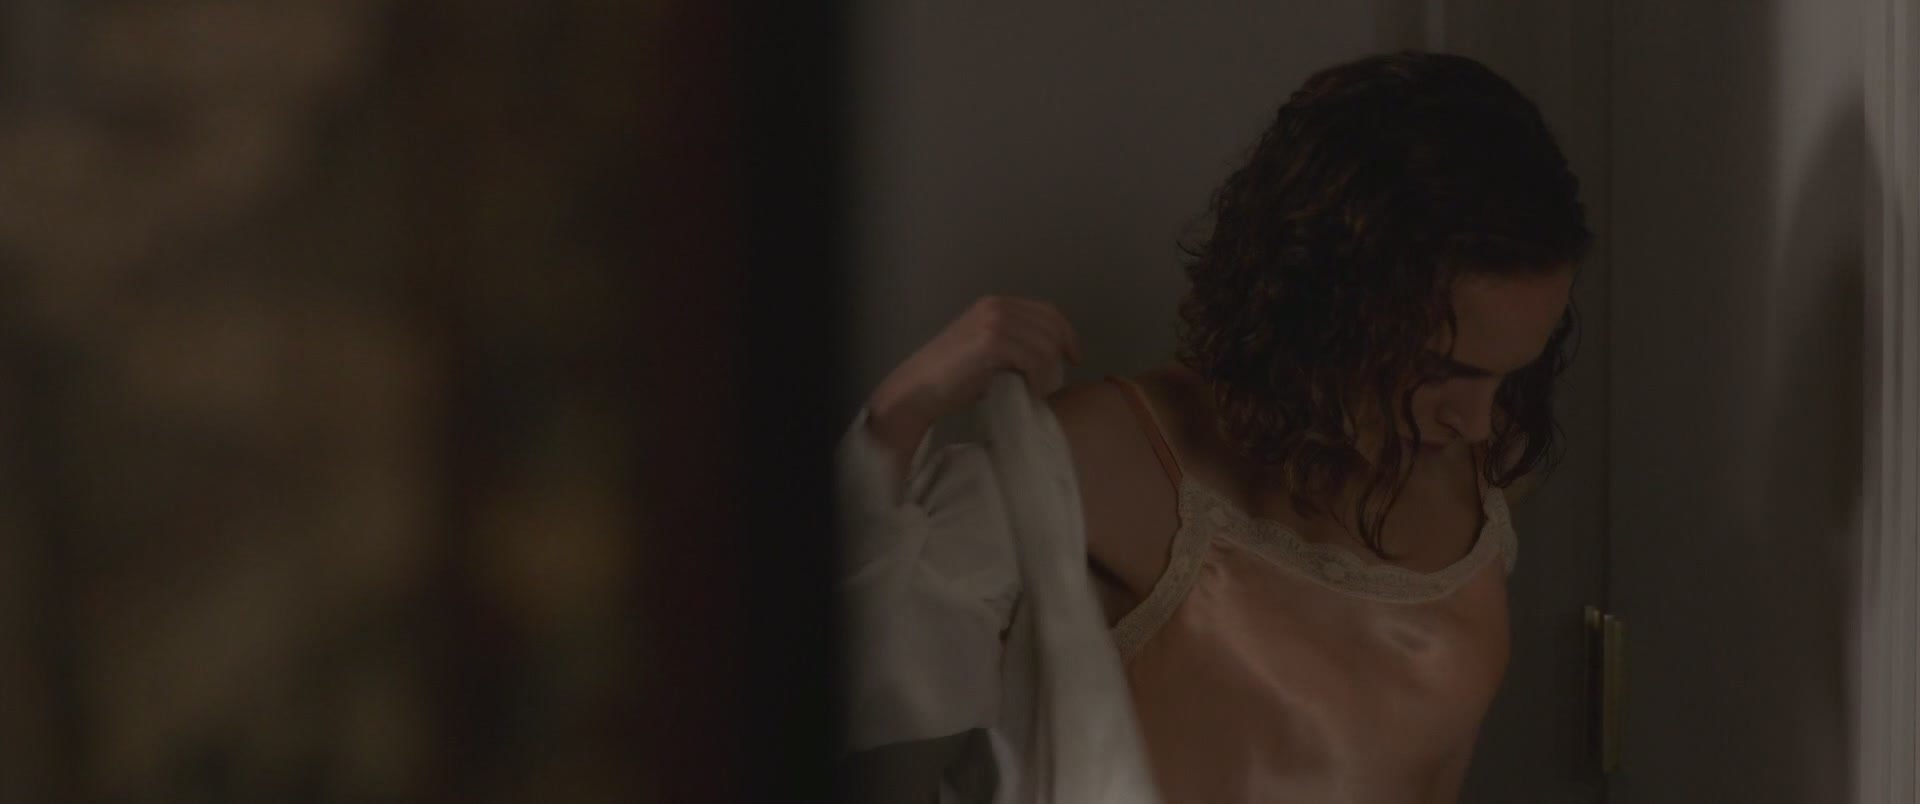 Natalie Portman Nude - Planetarium (2016) HD 1080p